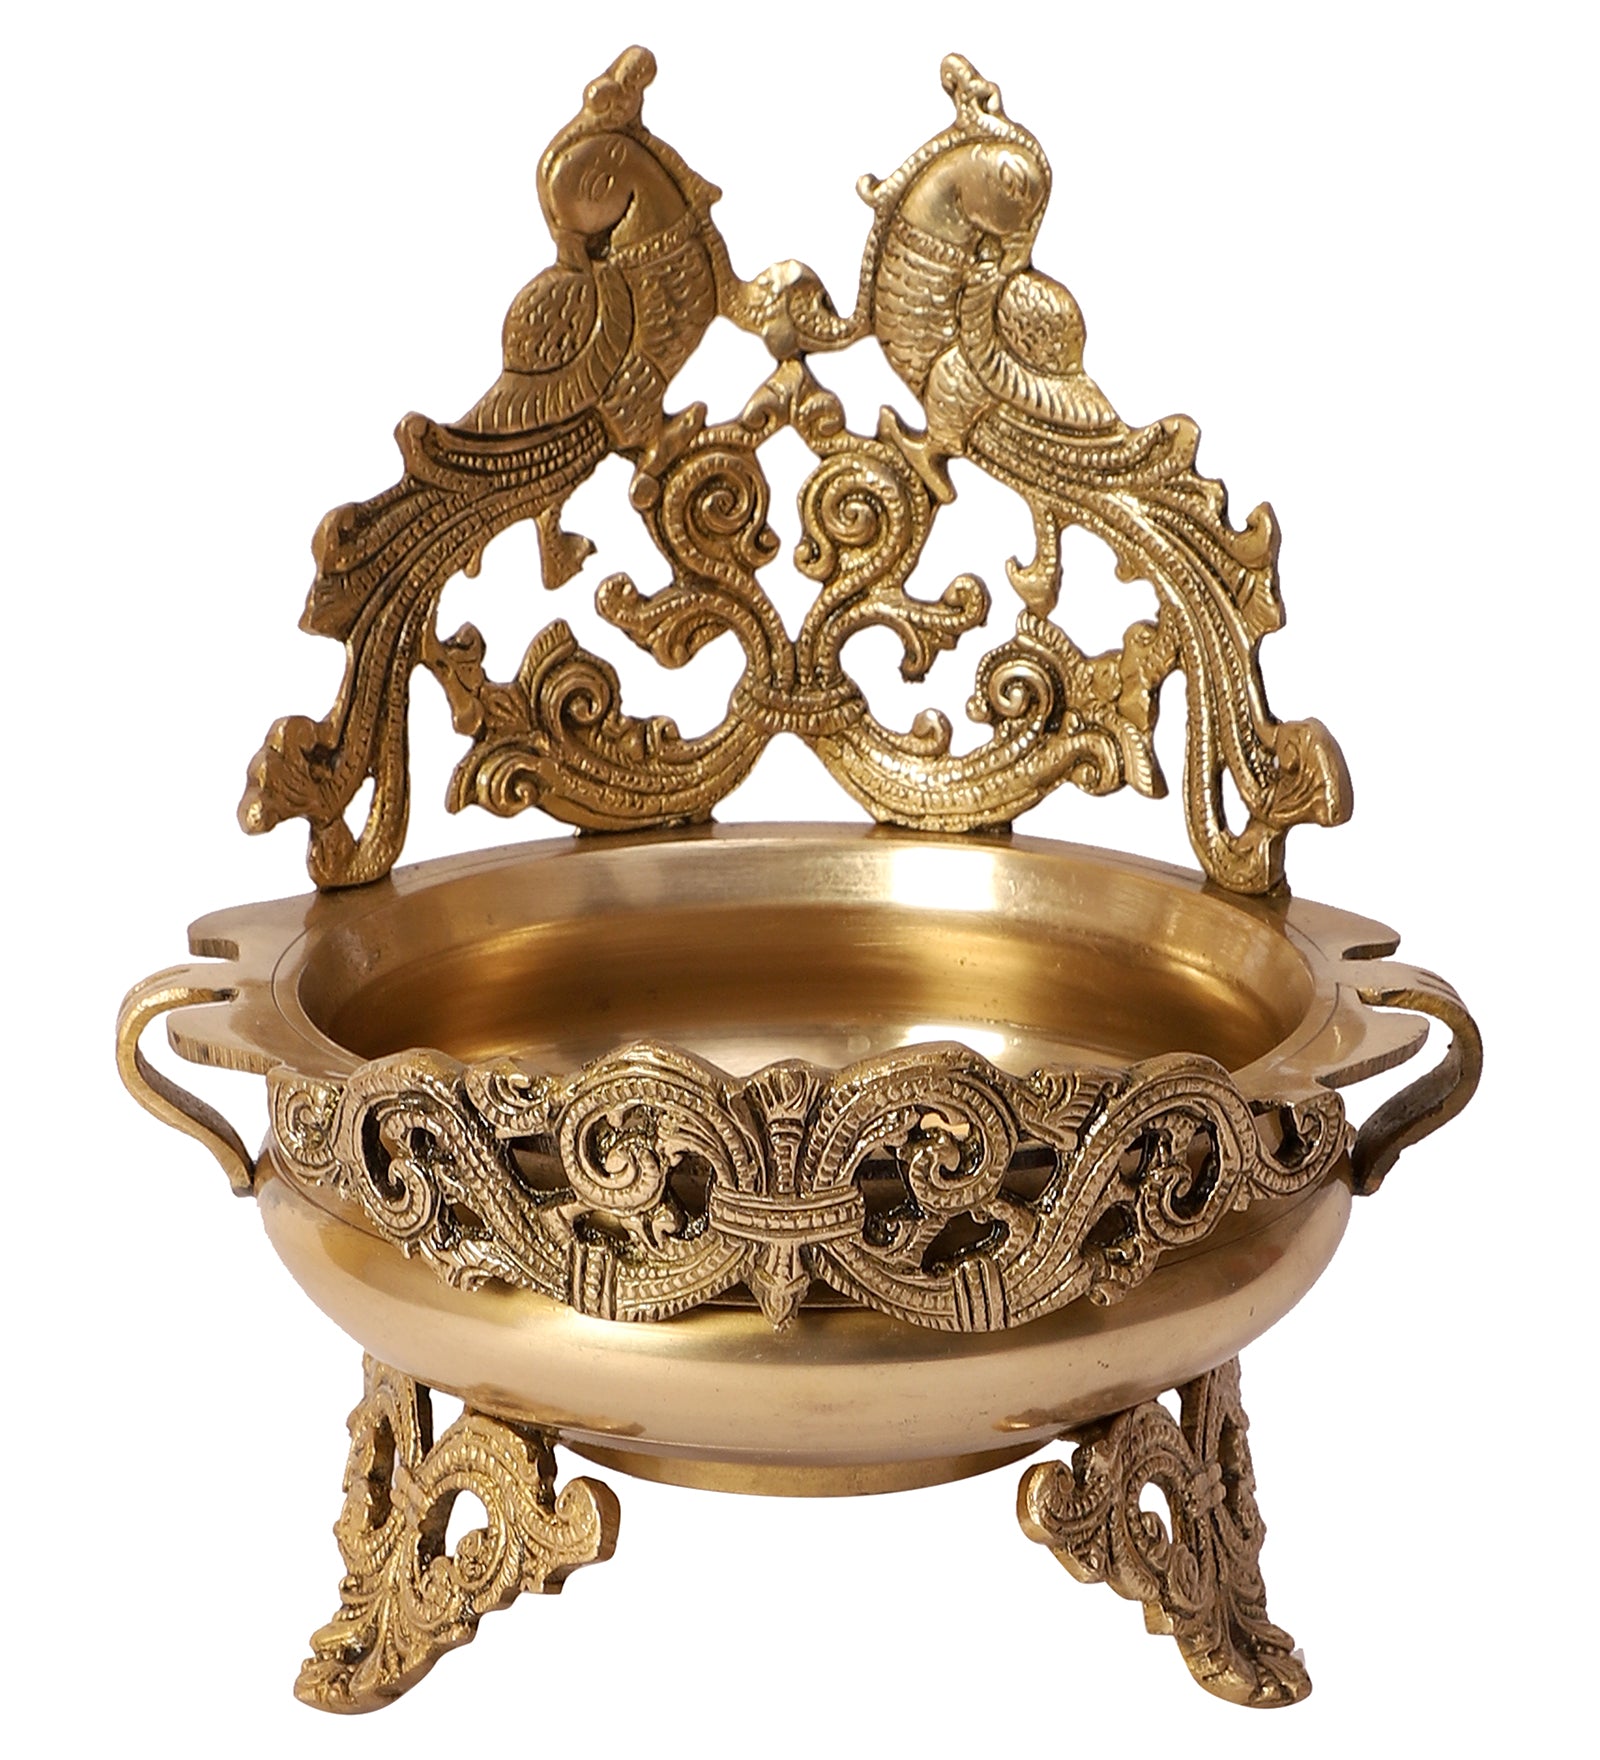 Twin Peacock Design 10 Inches Brass Urli, Brass Urli Bowl for Home Decor